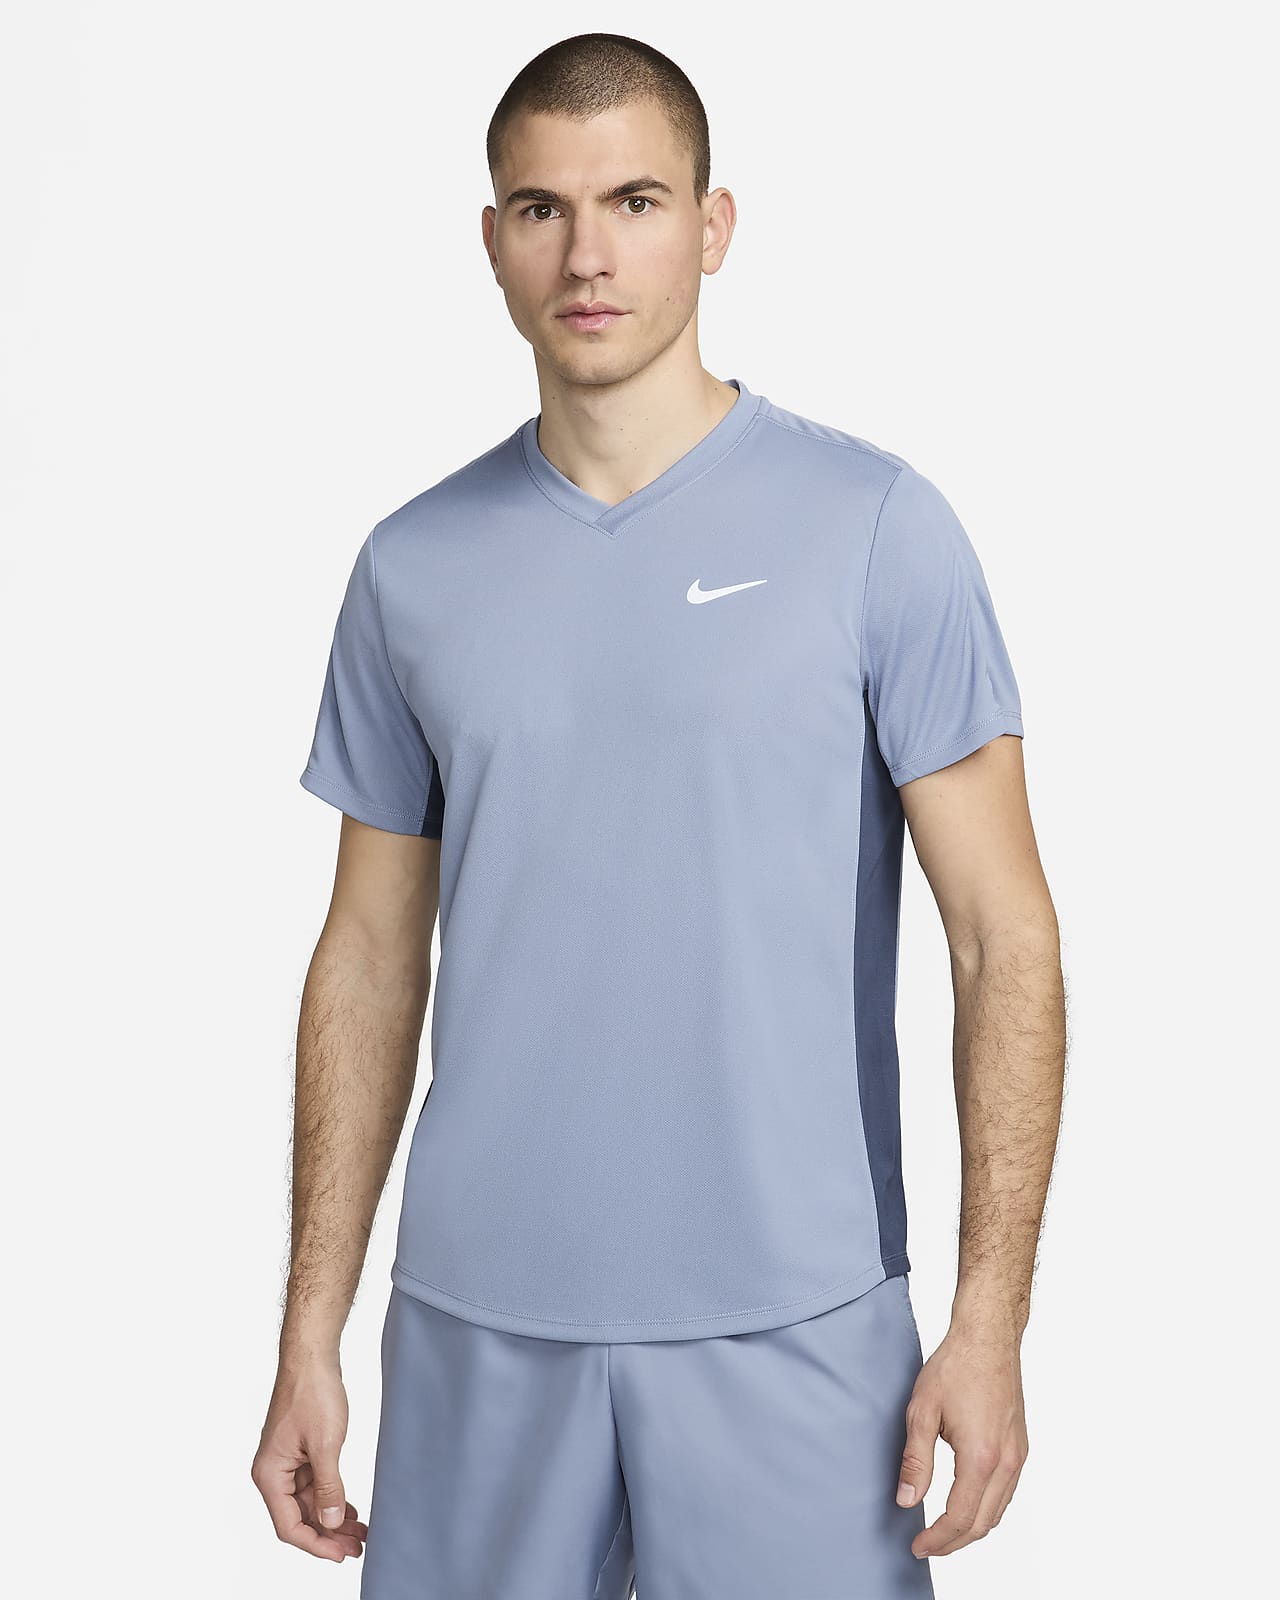 Buy NIKE Court Dry Short Sleeve Tennis Top Men's Clothing : XL